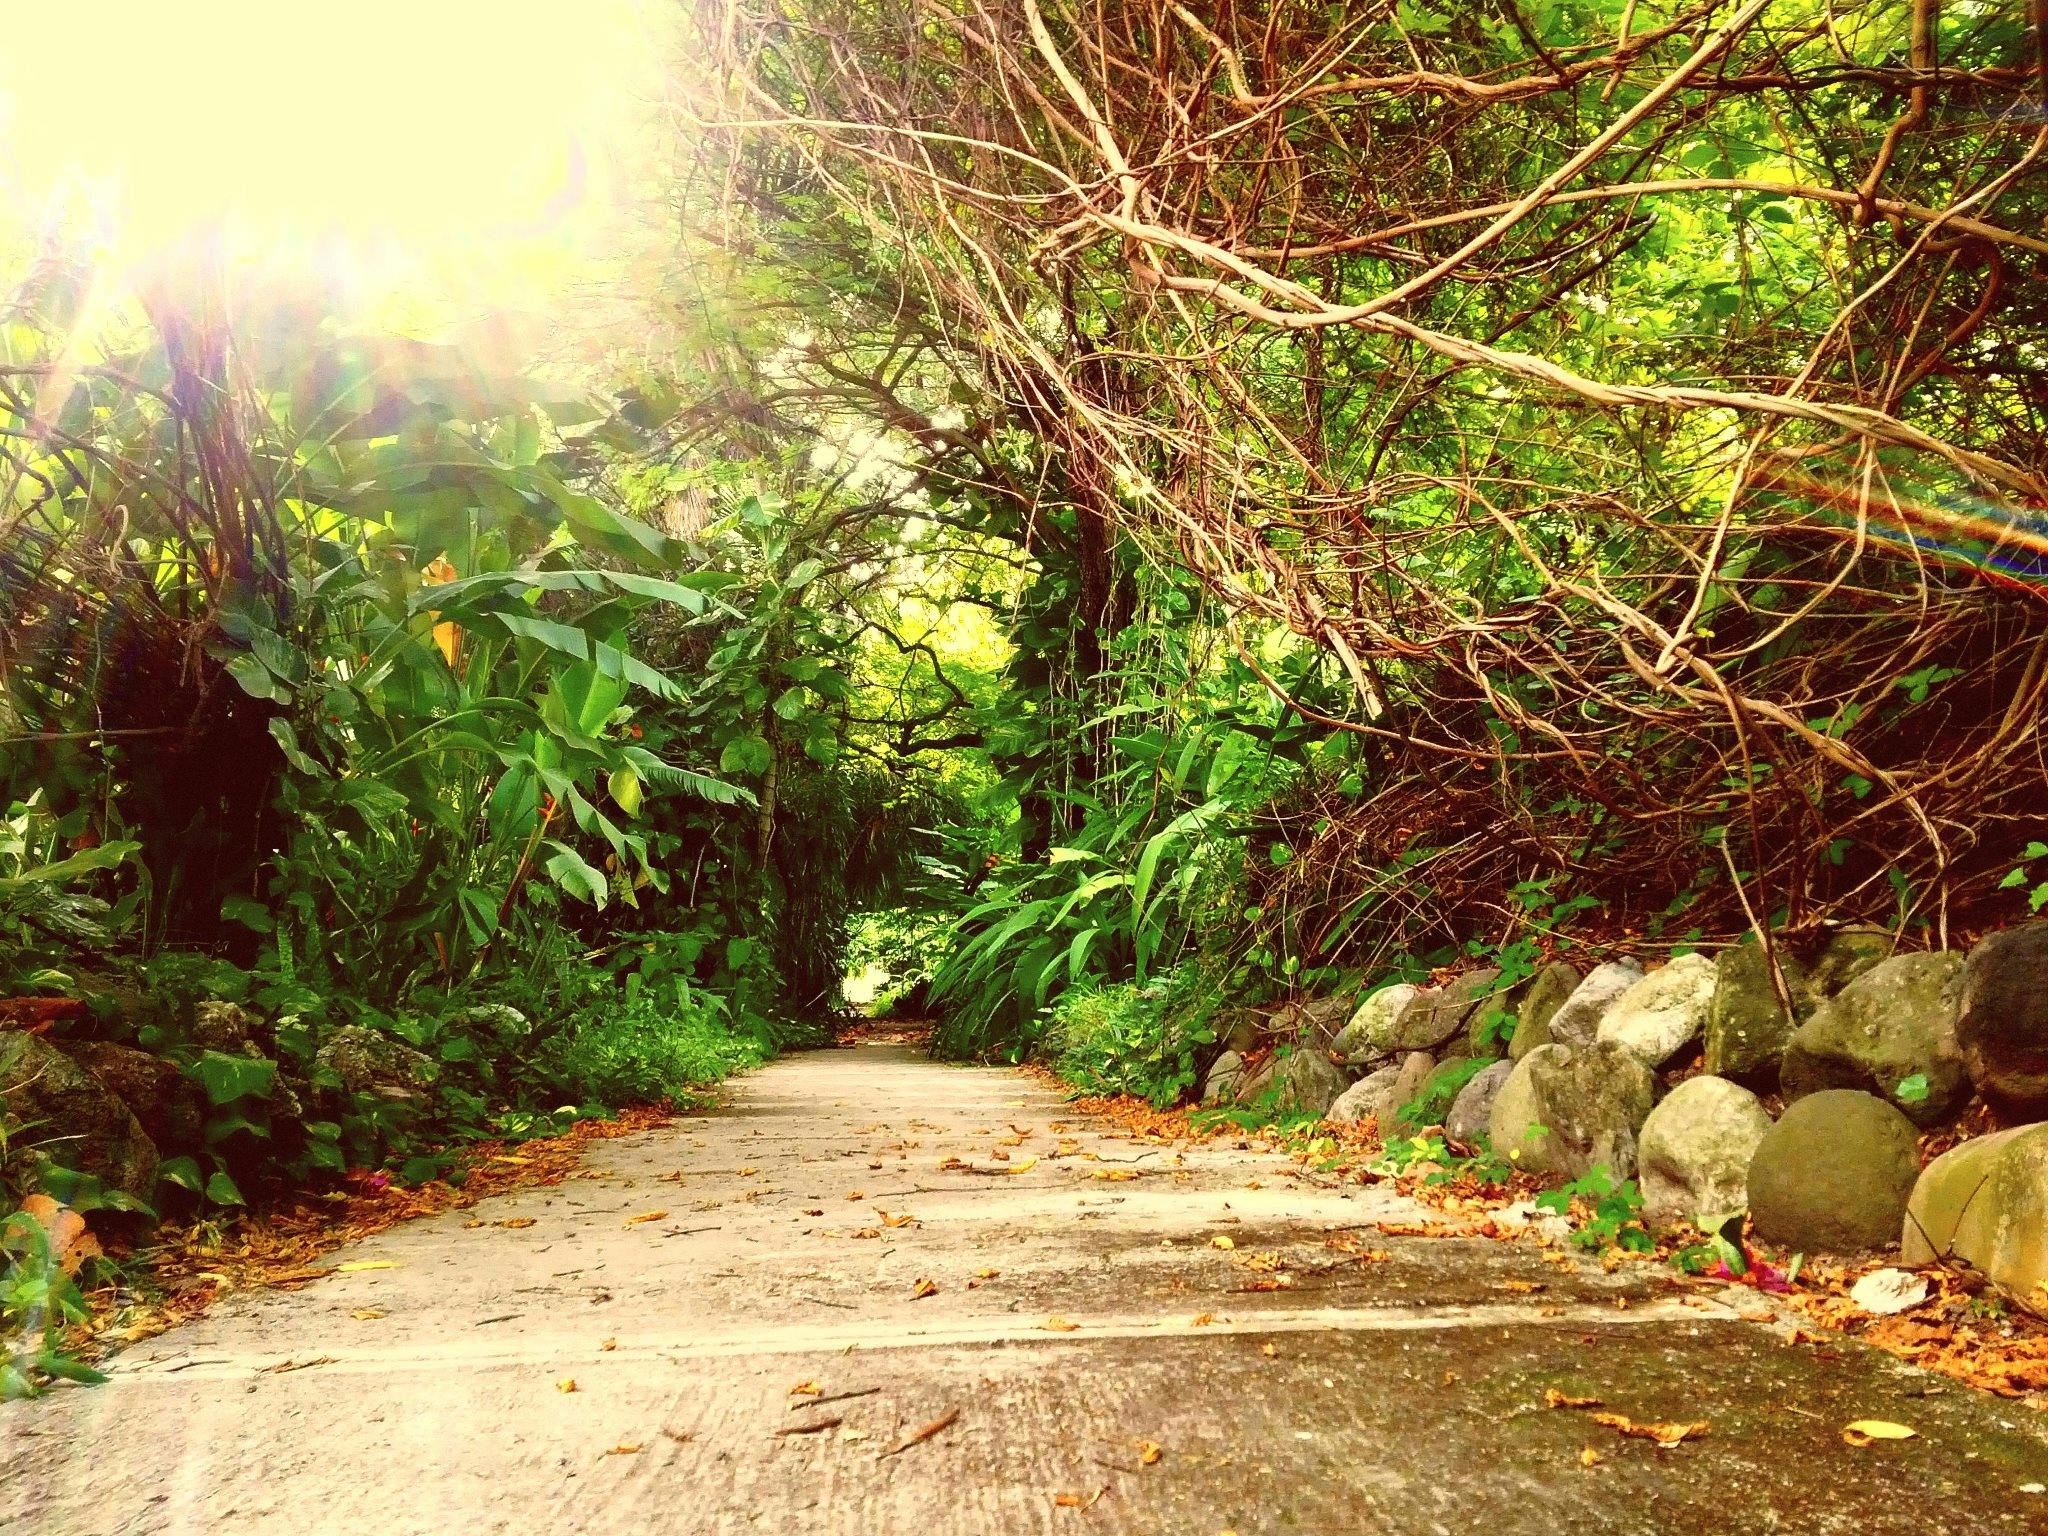 Free stock photo of Hope Botanical Garden -Jamaica